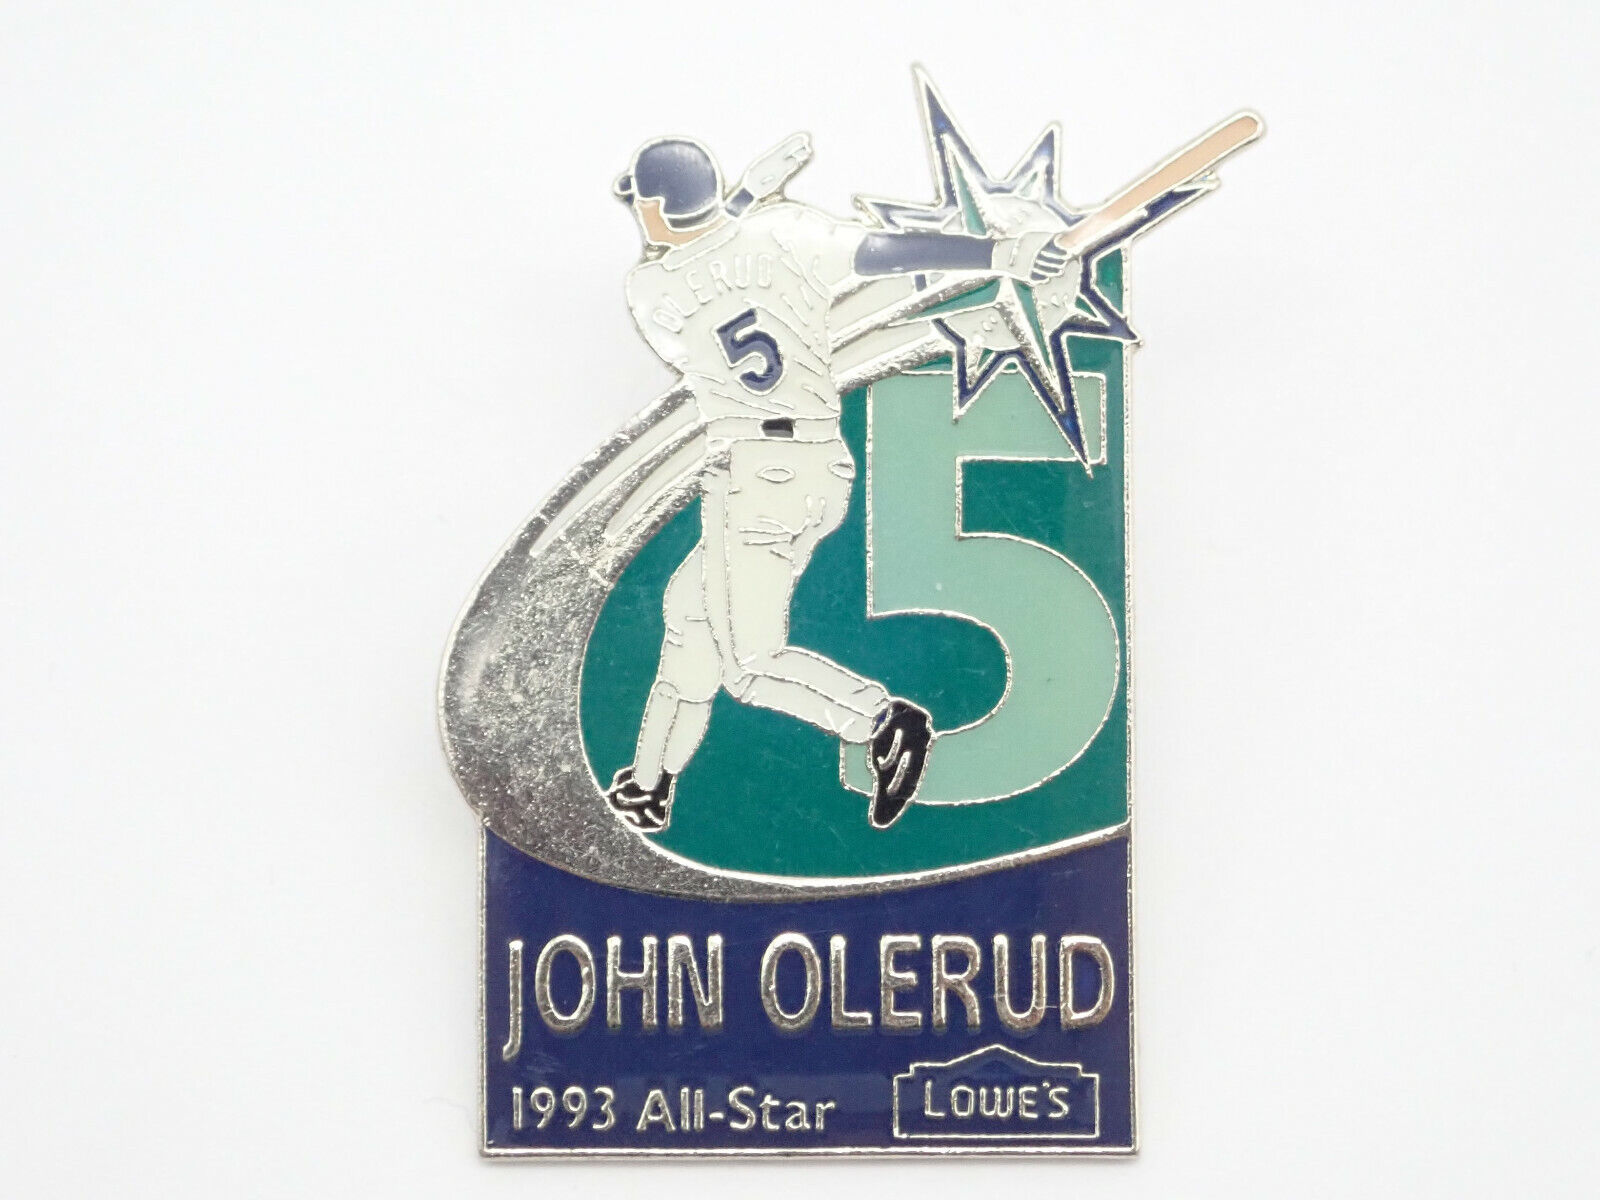 John Olerud 1993 Baseball All Star 5 Lowe's Vintage Lapel Pin